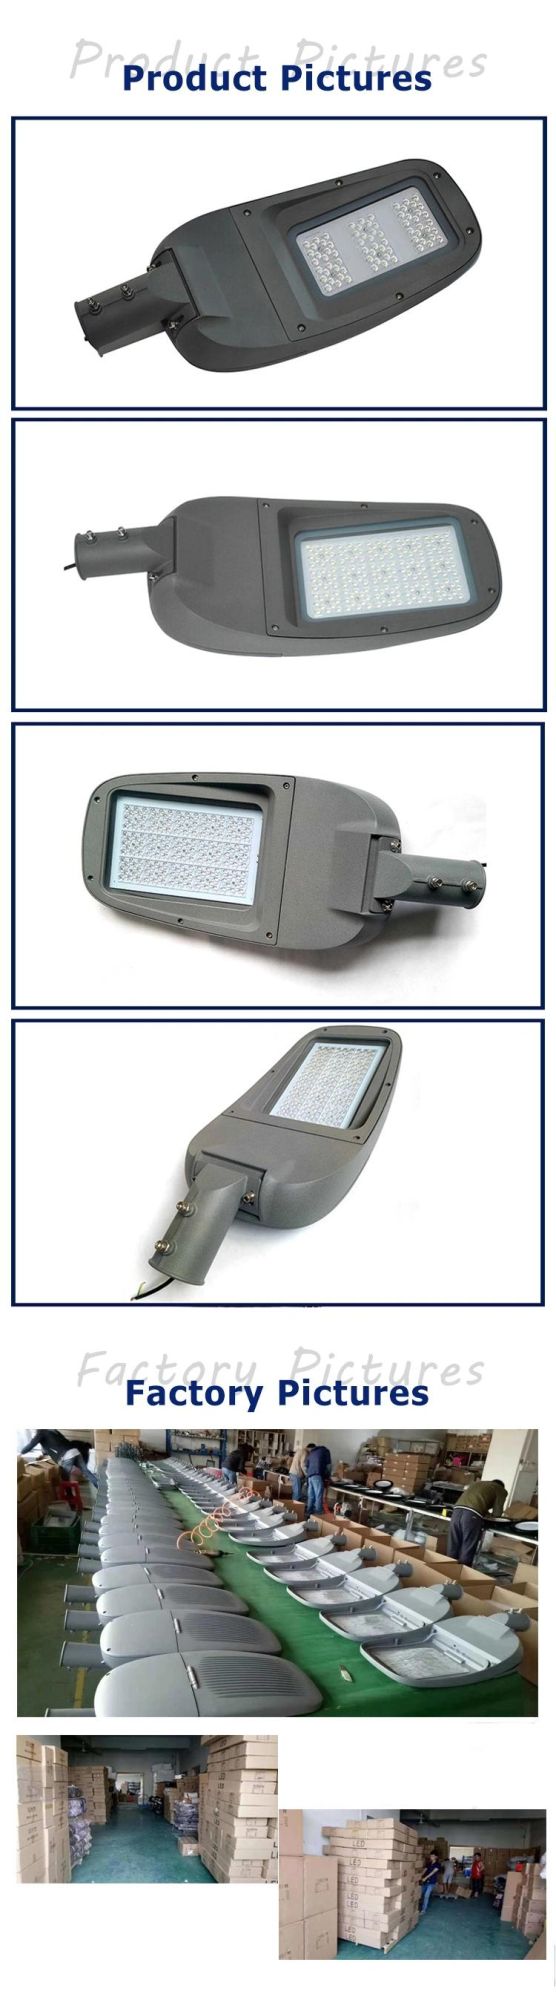 Hpzm LED Outdoor Street Lamp SMD Road Light IP66 Waterproof